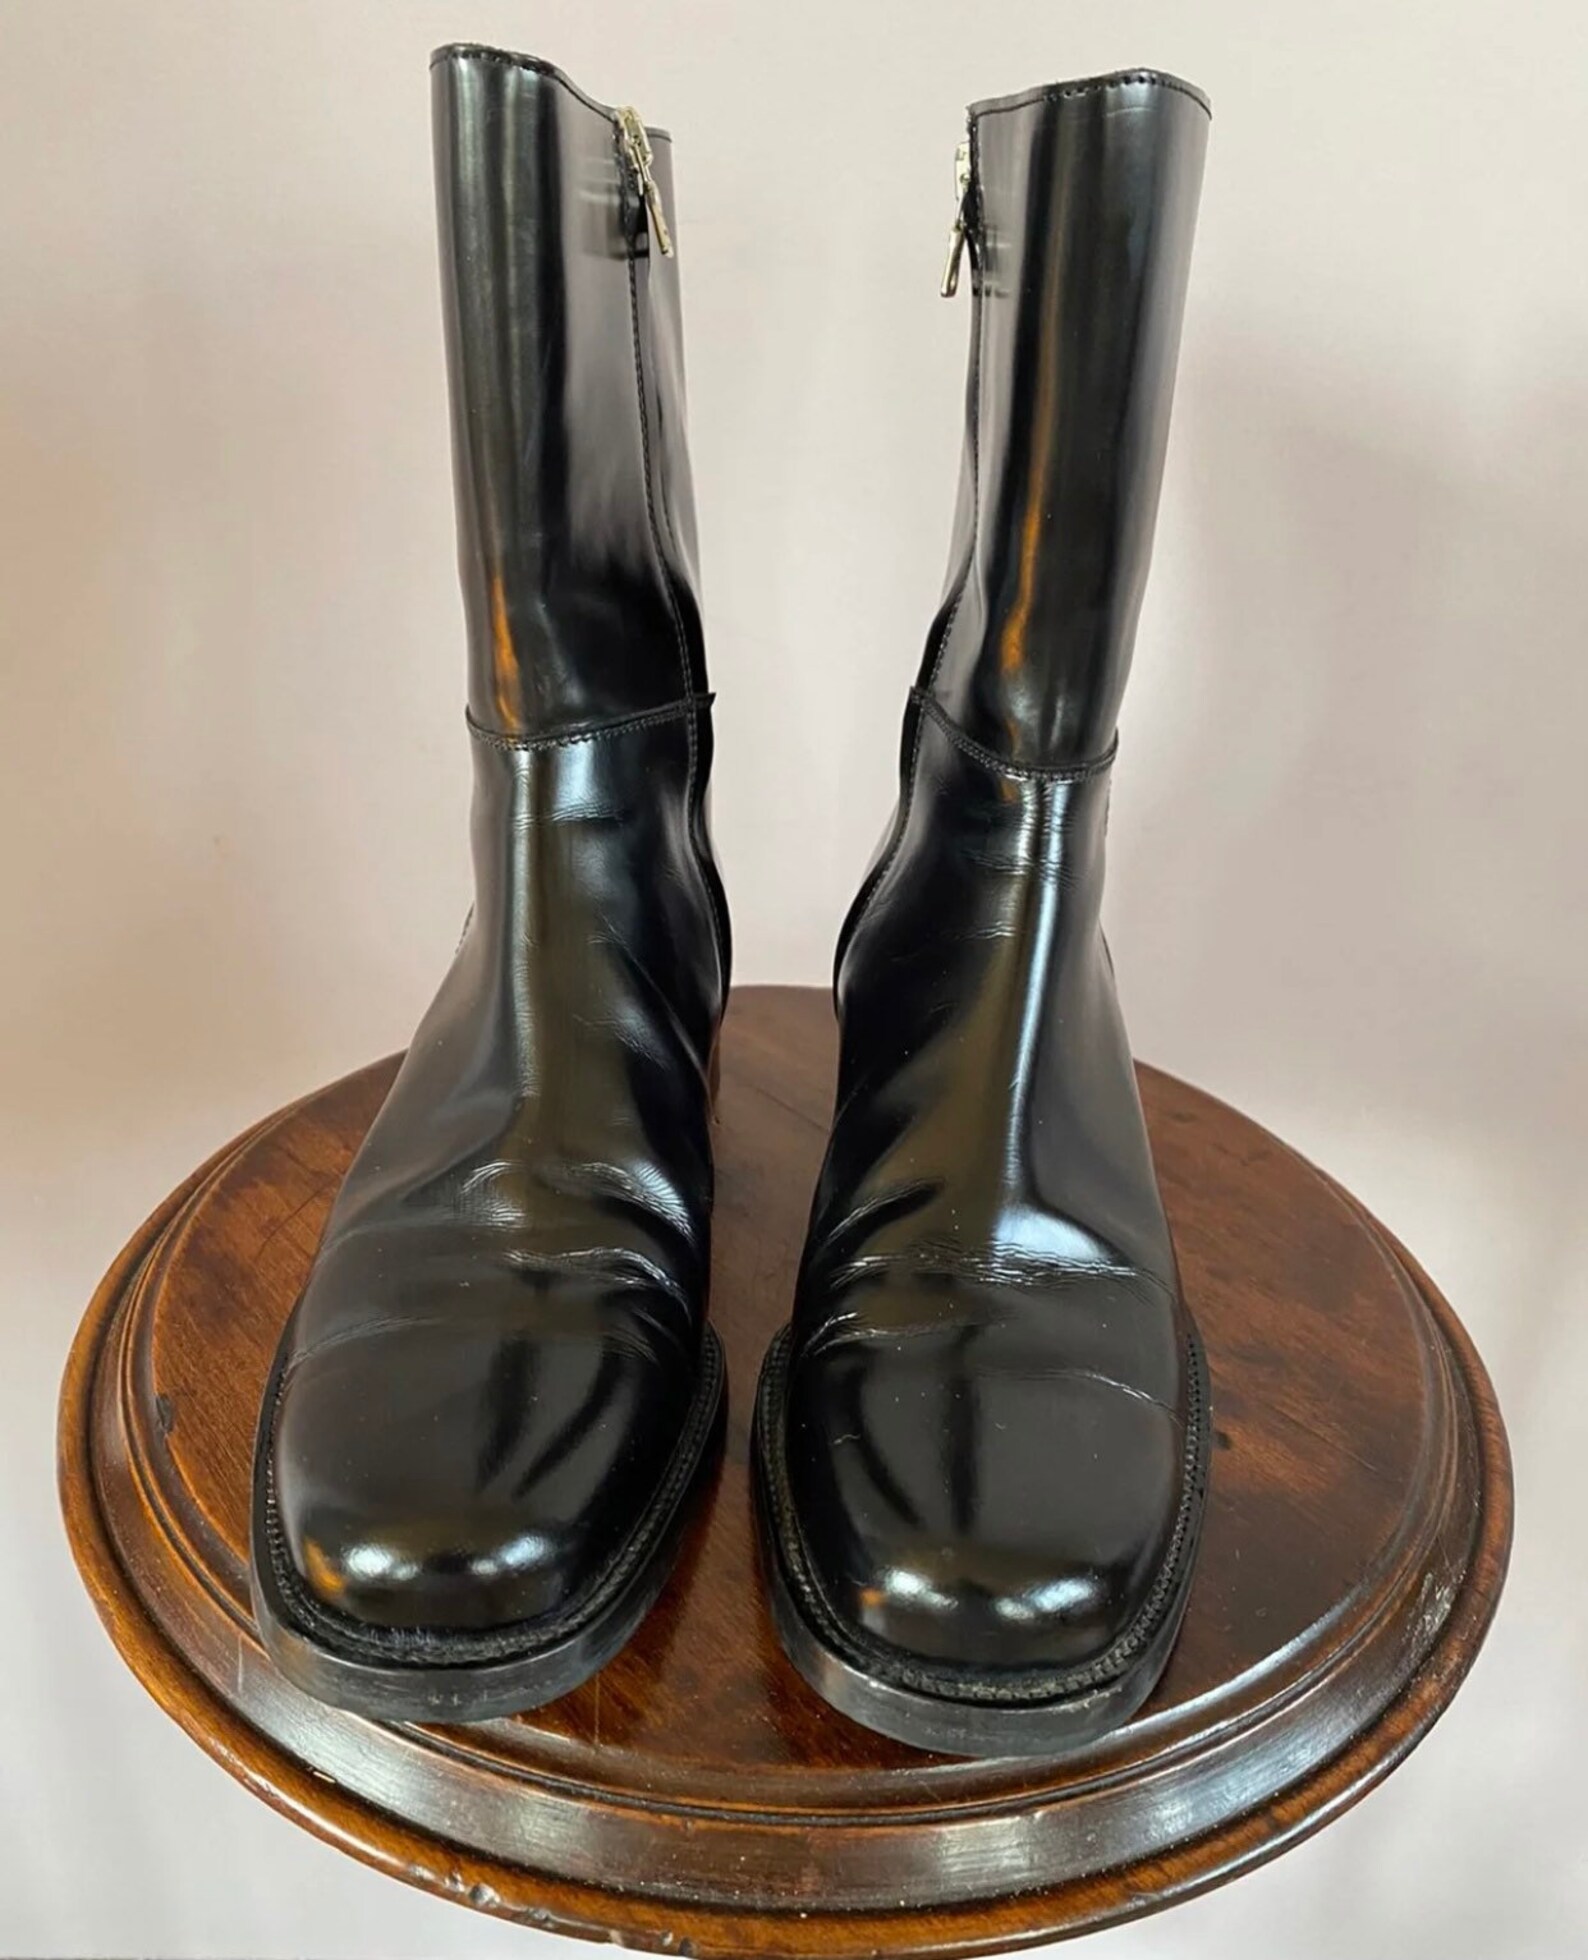 Prada Black Spazzolato Boots. Calzature Donna Size 39. | Etsy